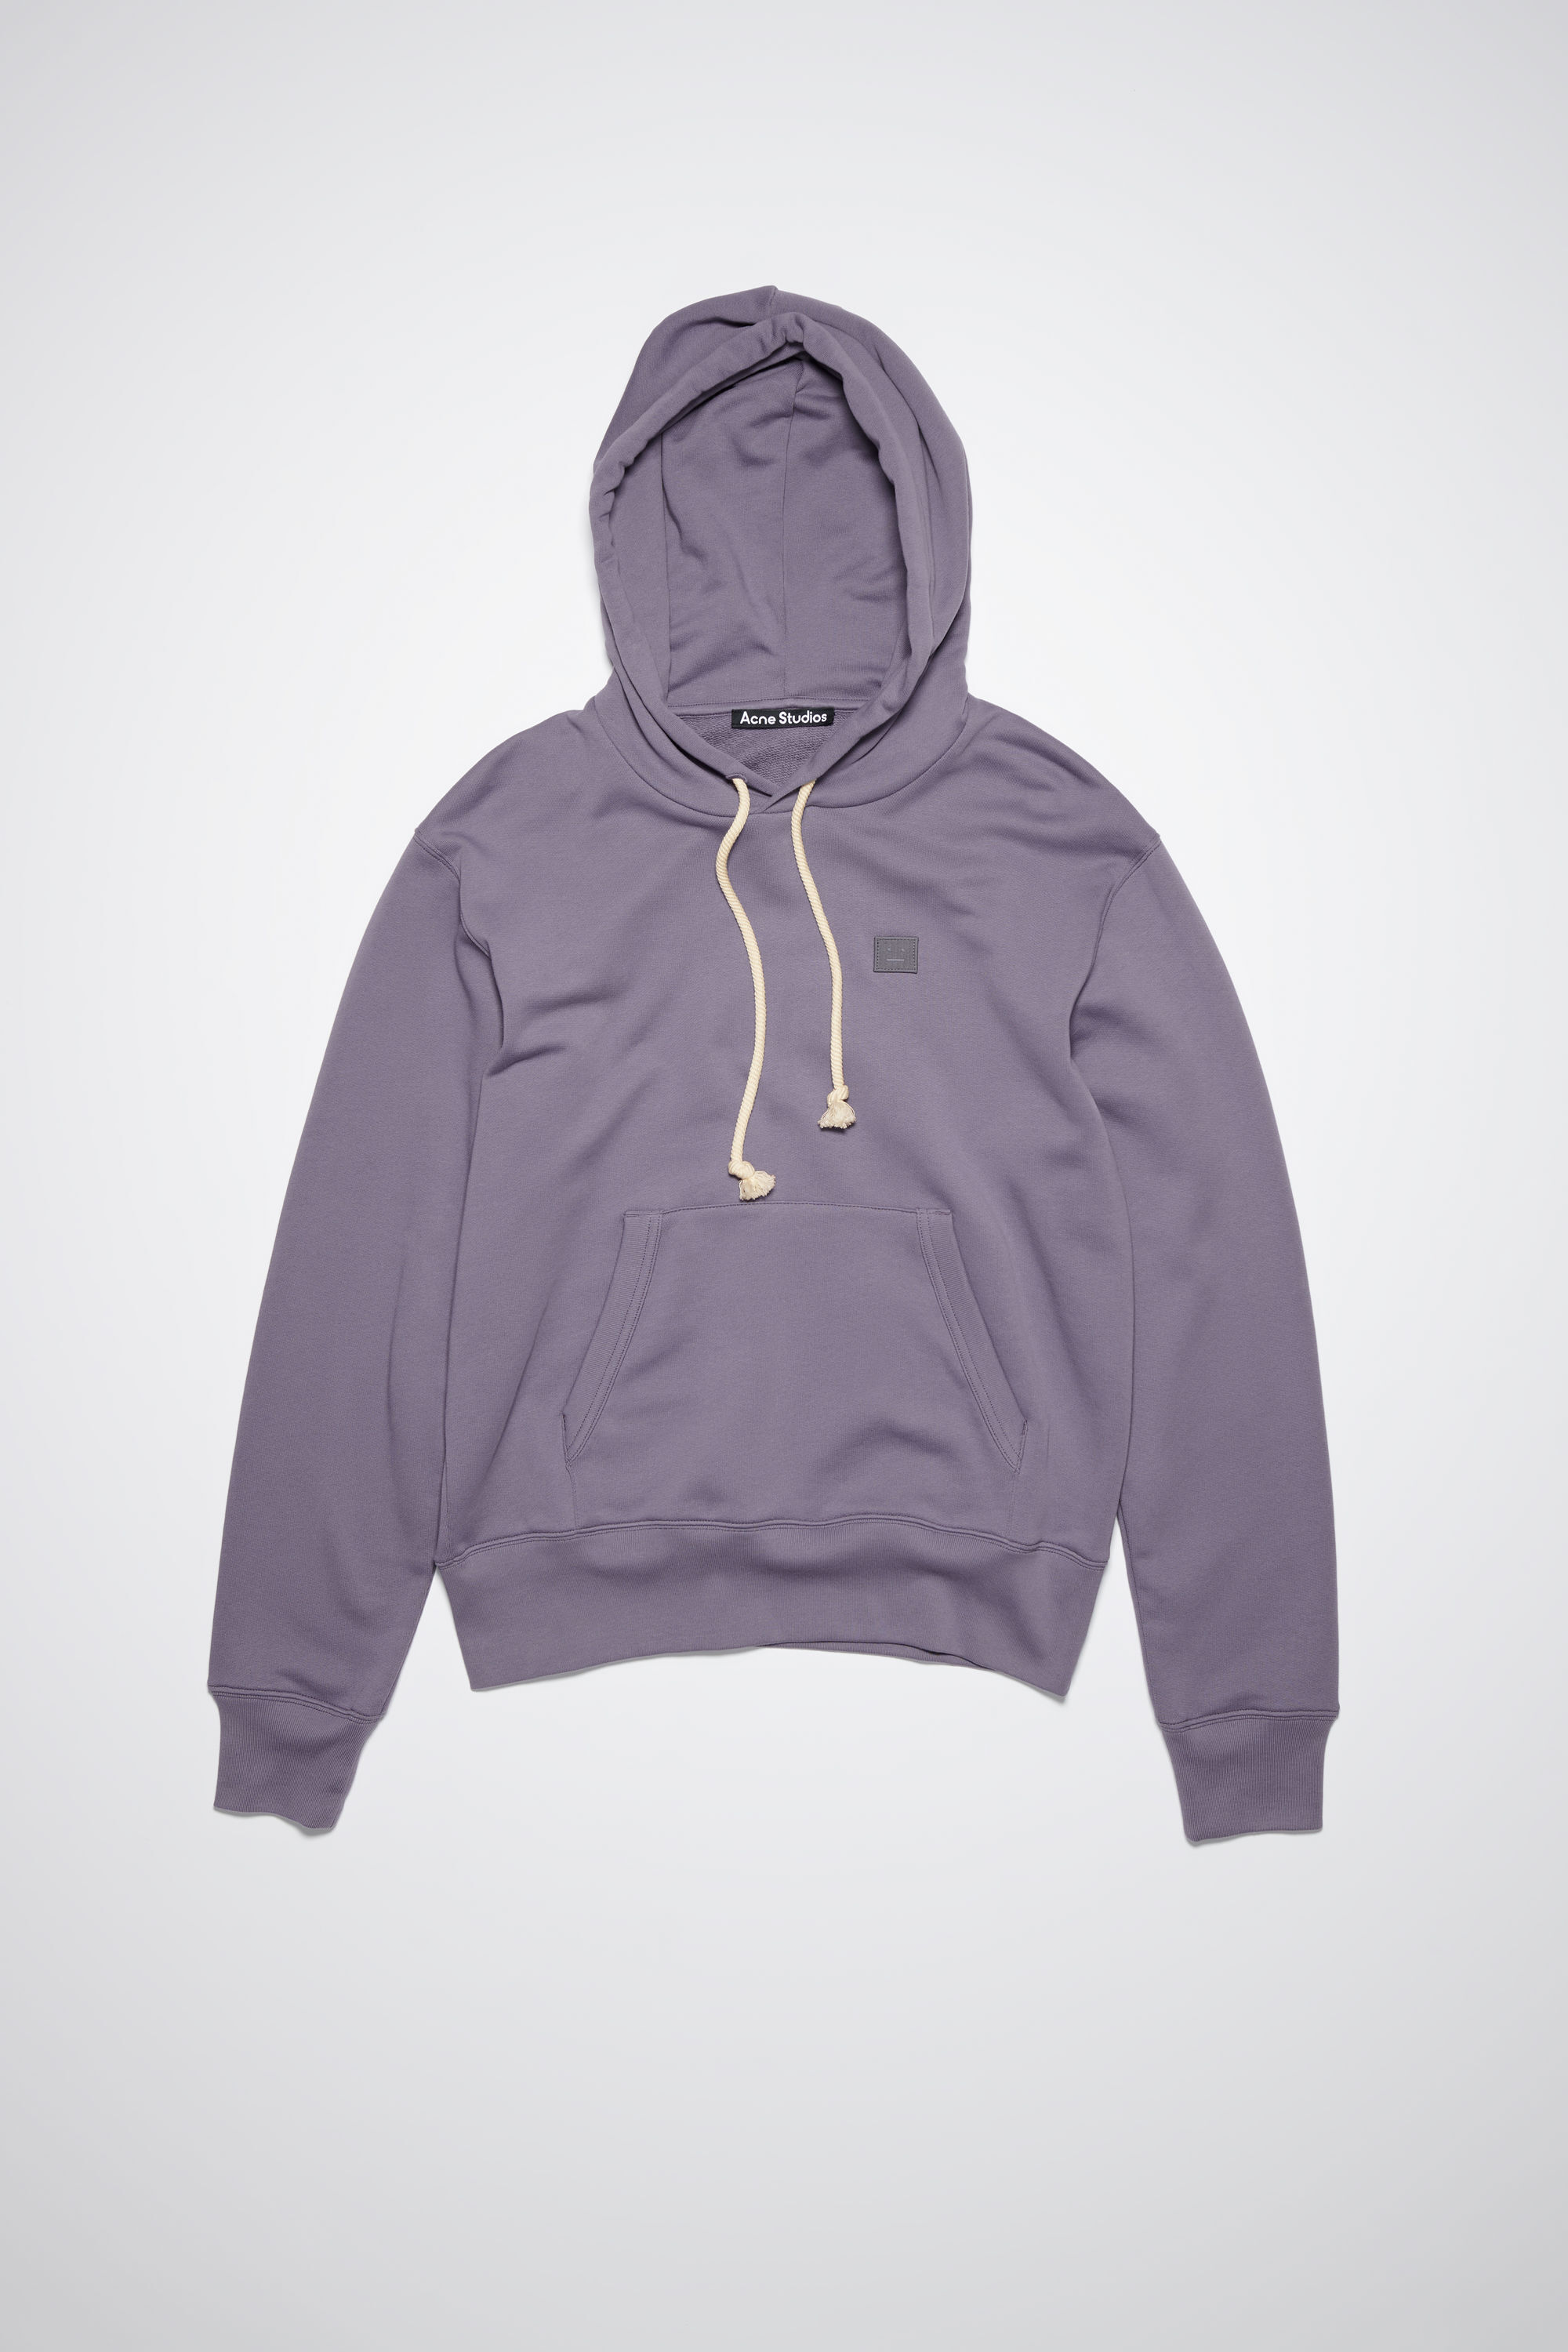 Acne Studios - Hooded sweatshirt - Regular fit - Faded purple